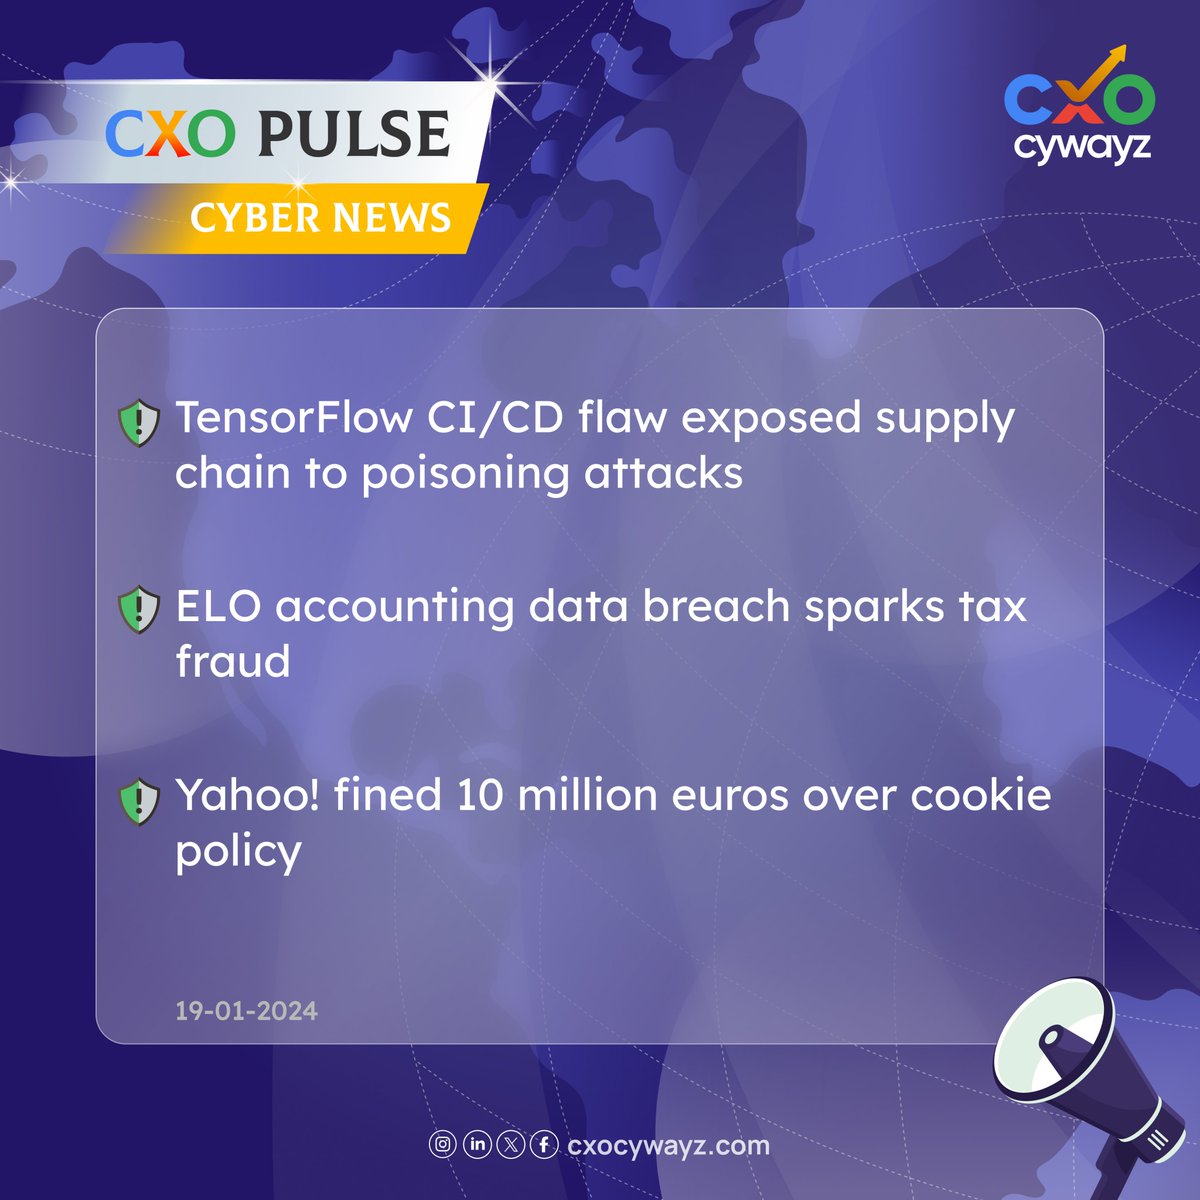 CXO PULSE Cyber News Headlines🚨

#cxopulse #cxocywayz #CyberSecurity #Yahoo #breach